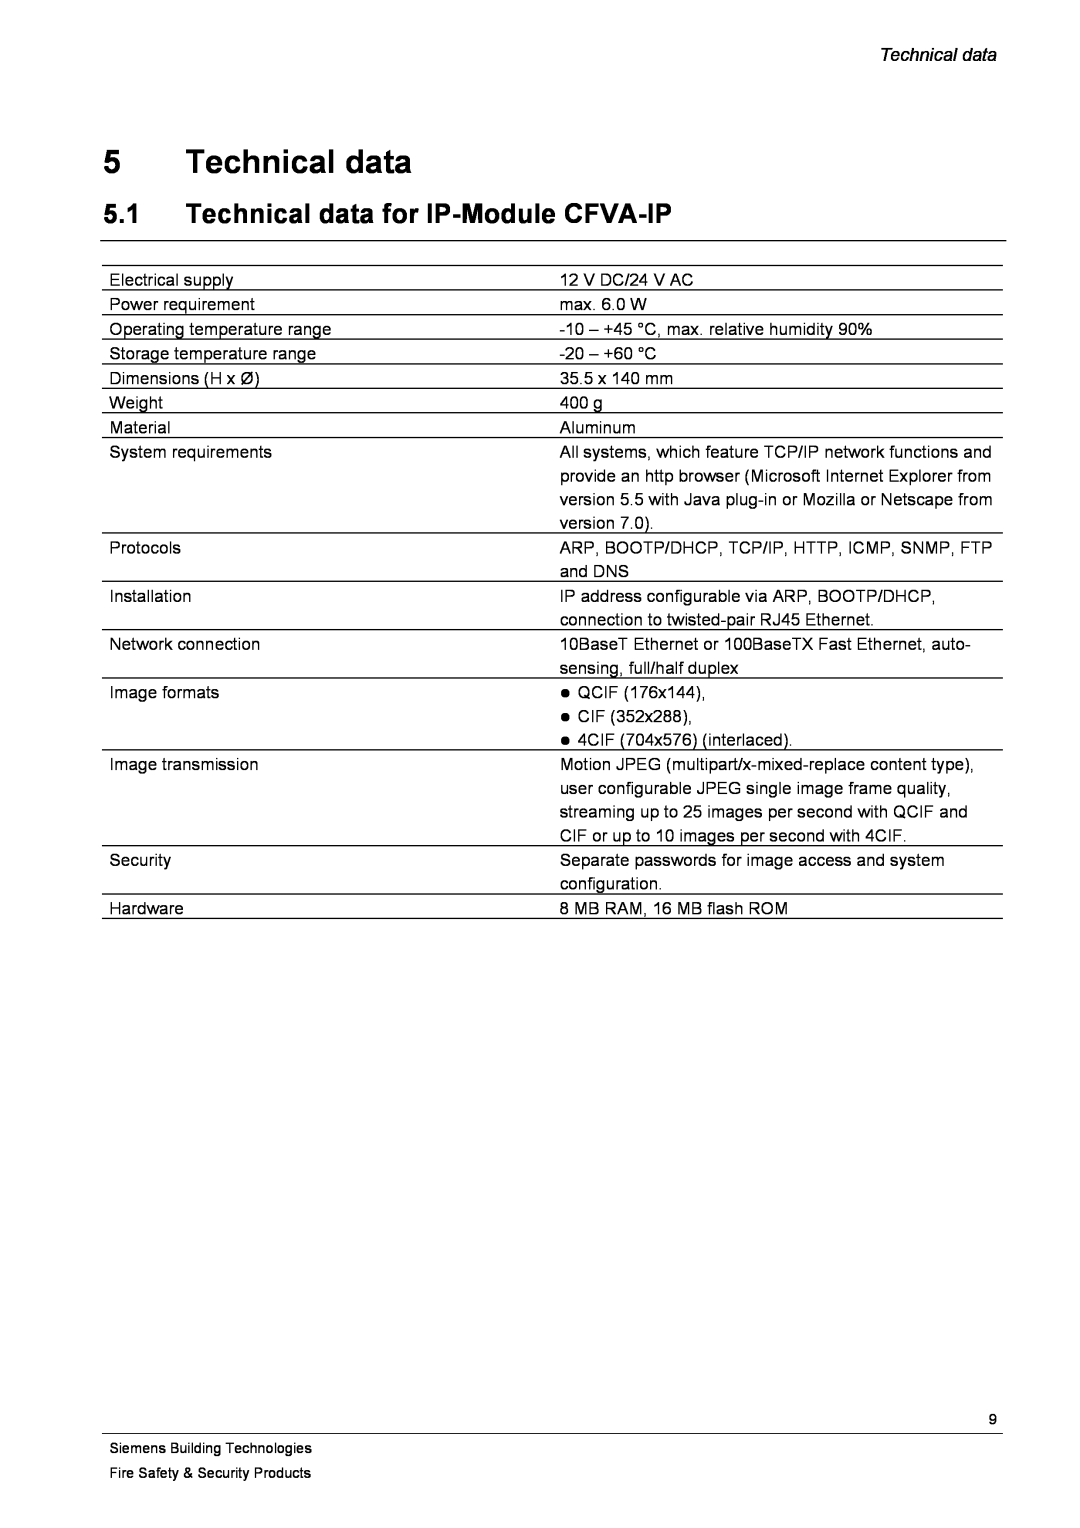 Siemens user manual 5.1Technical data for IP-Module CFVA-IP 